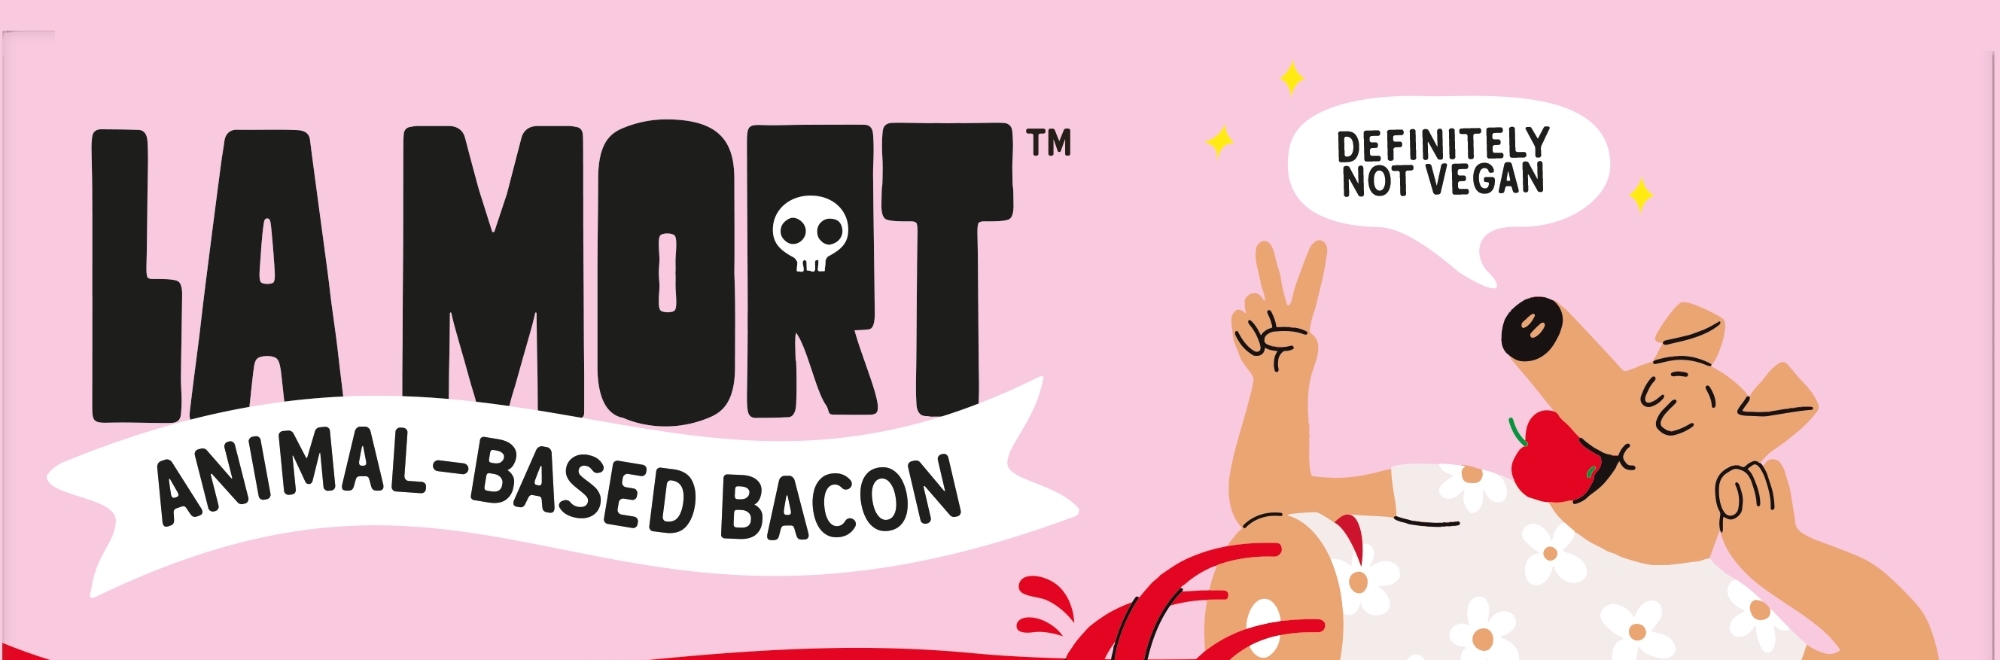 Plant-based bacon brand La Vie revolutionises the food market with animal-based bacon